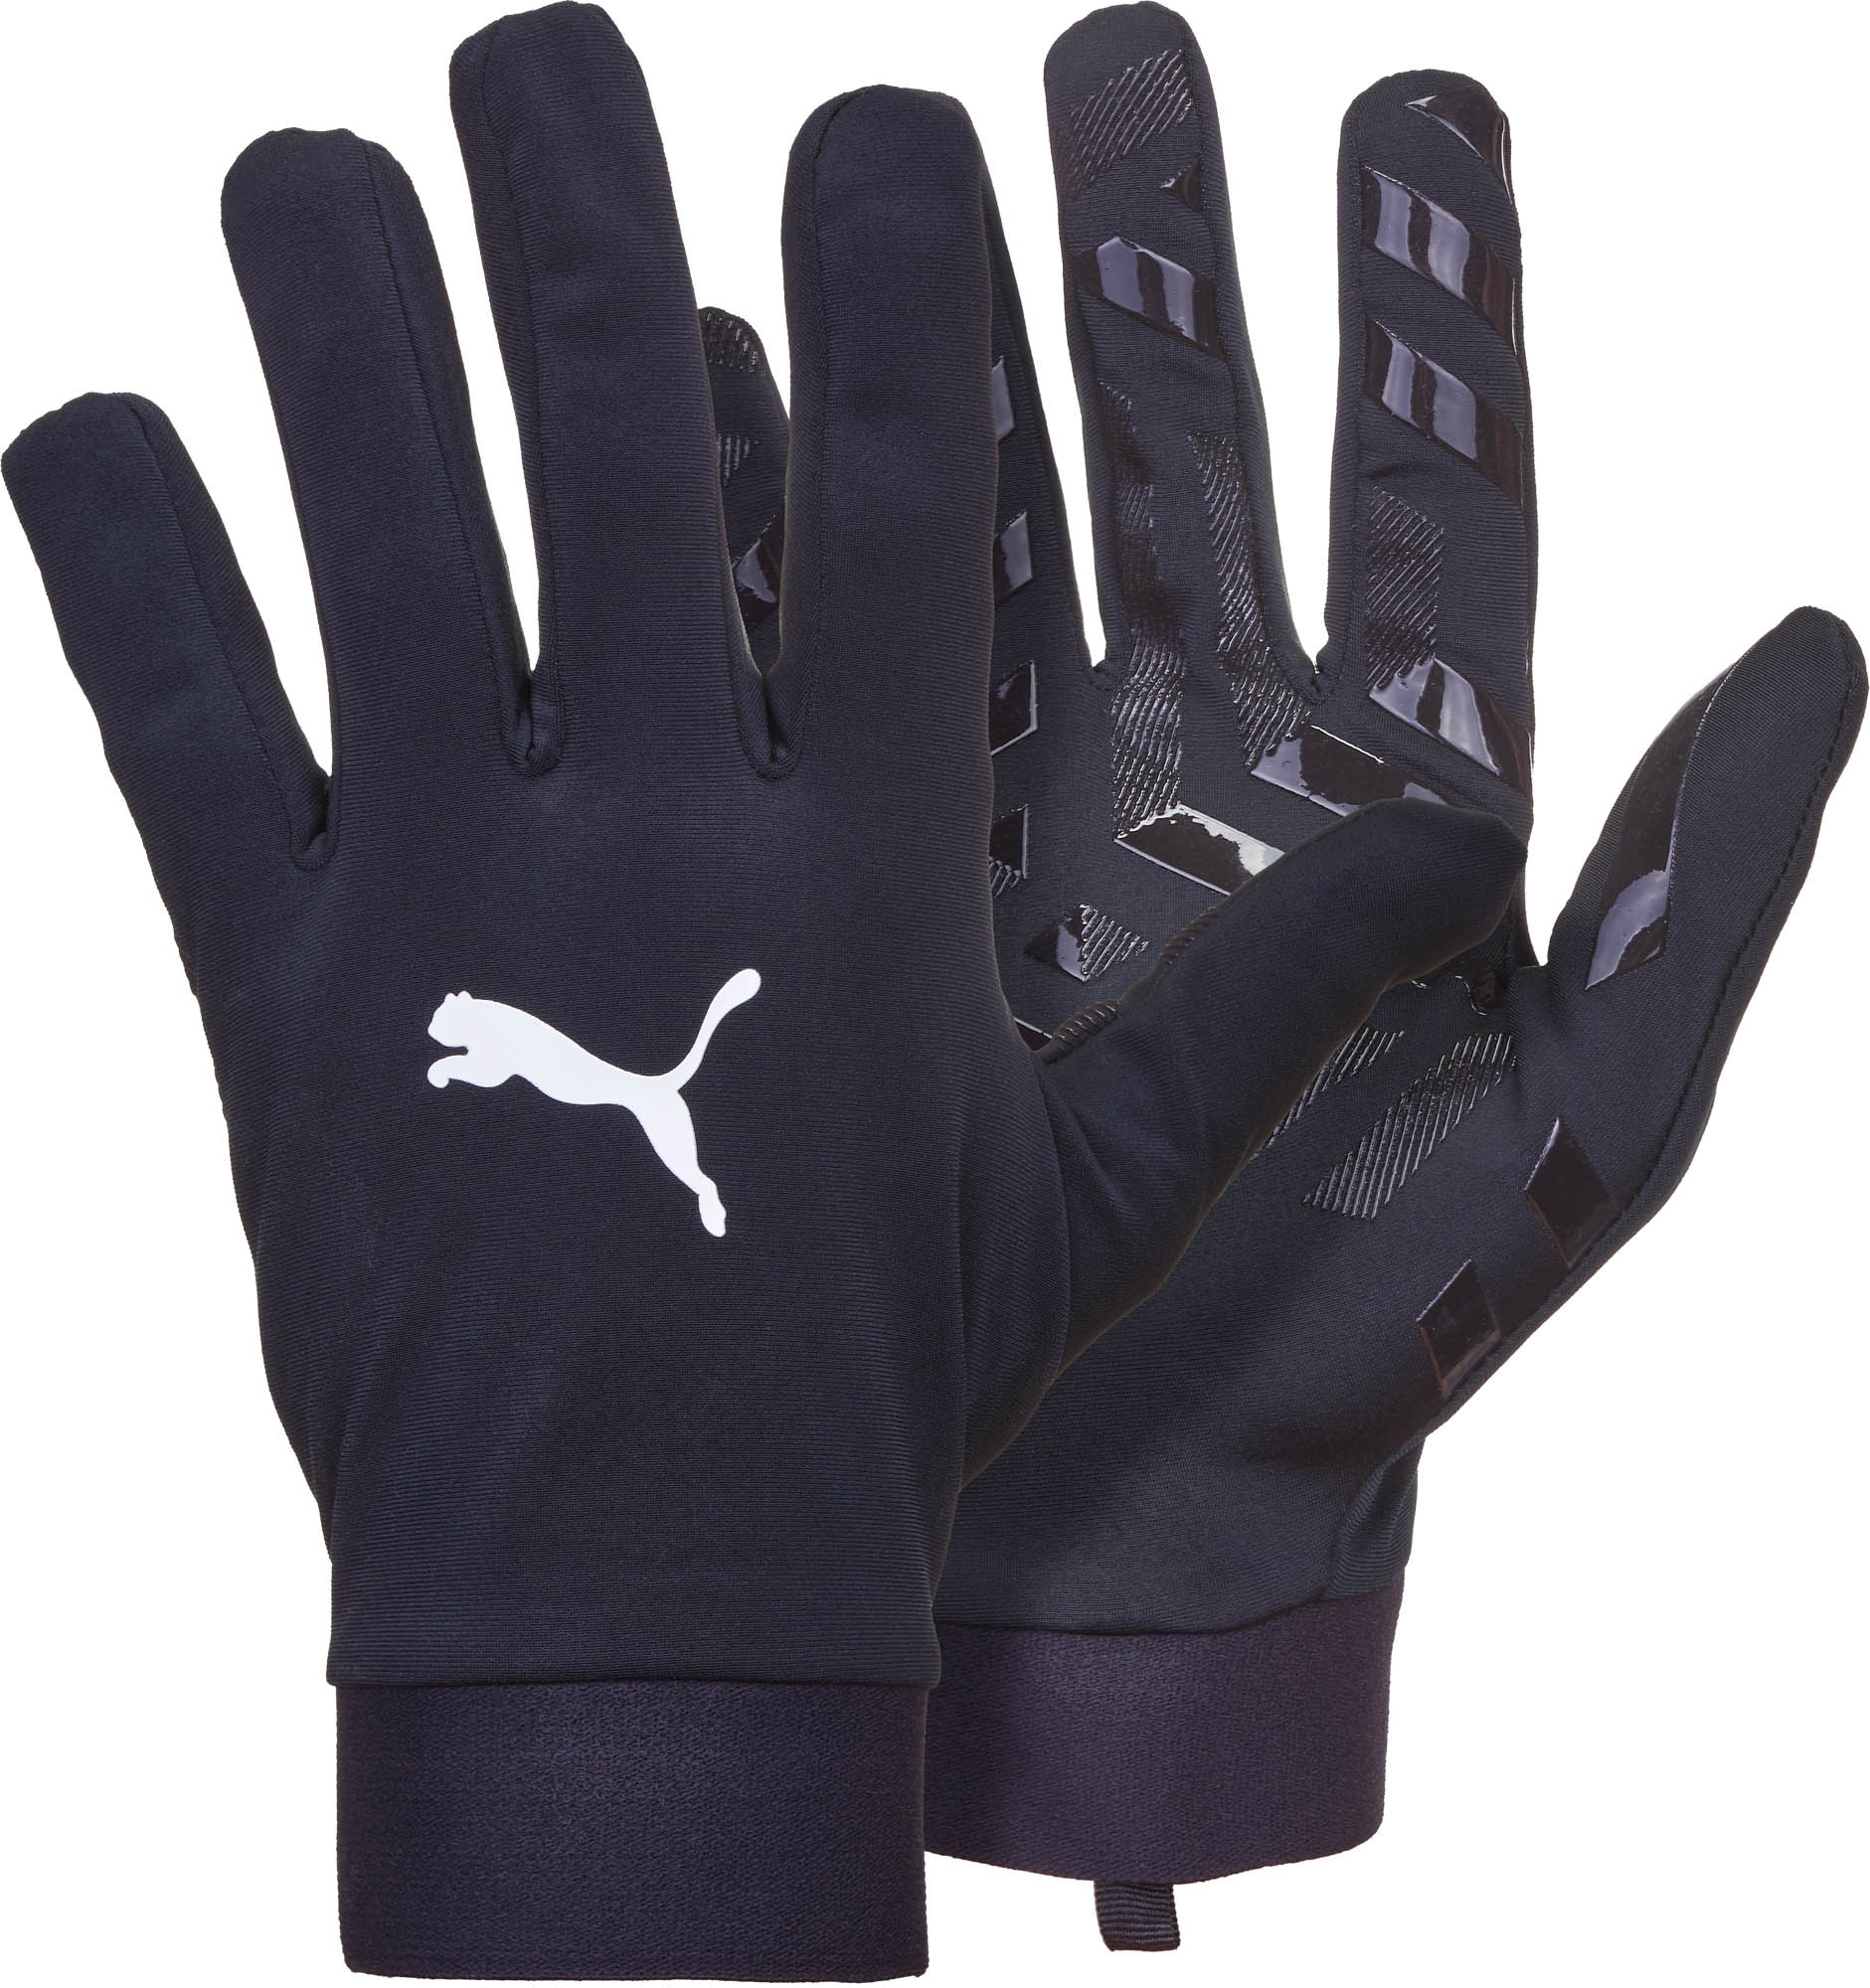 Puma Field Player Glove - Black